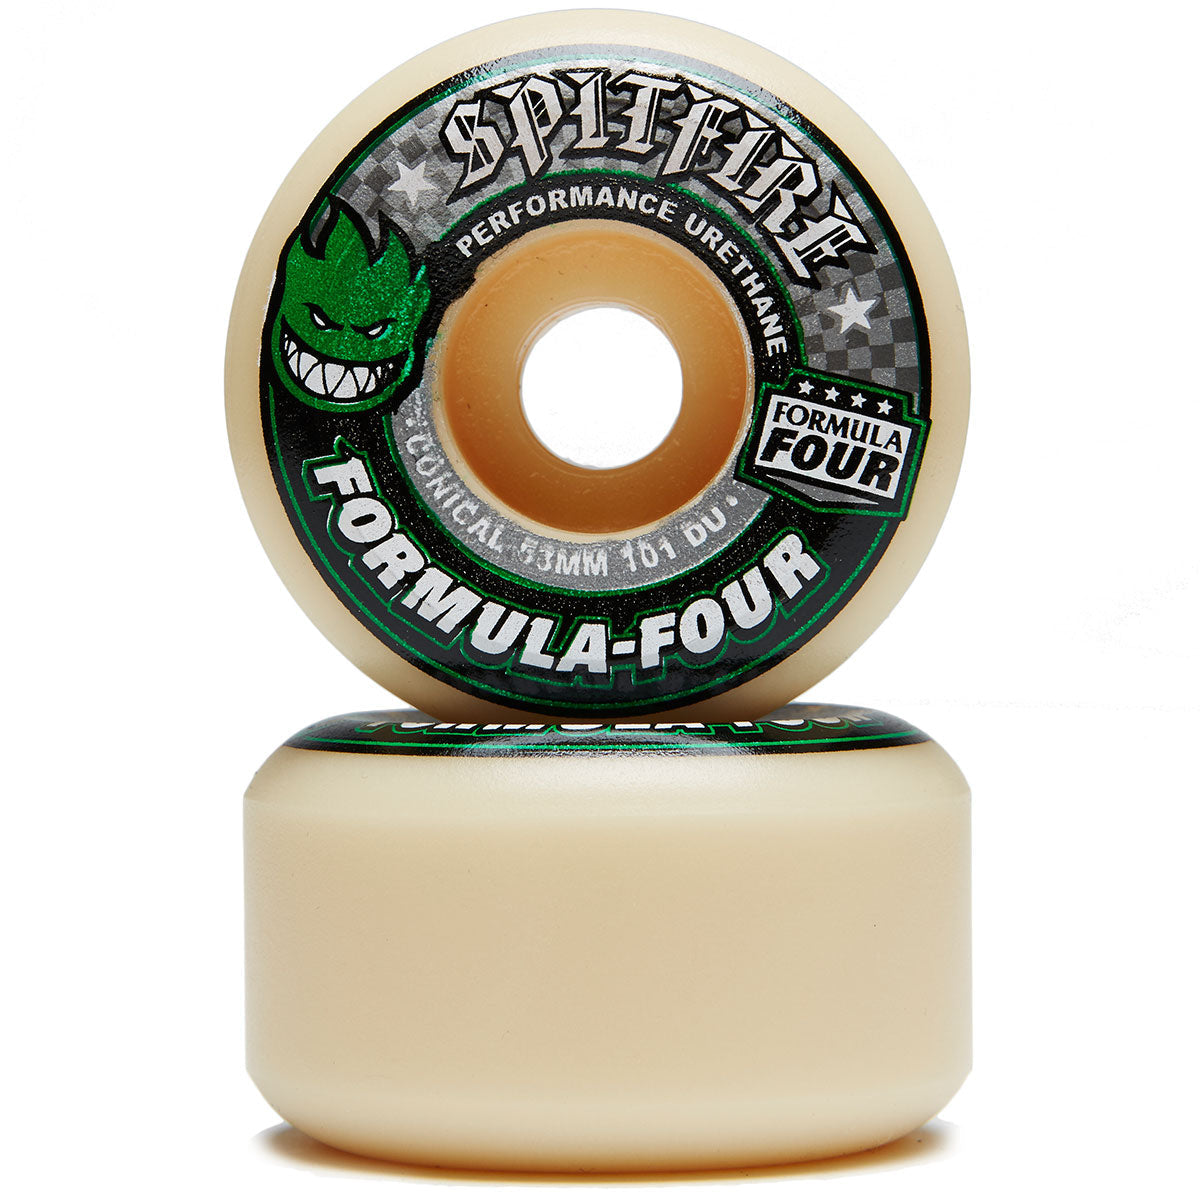 Spitfire Formula Four 101D Conical Skateboard Wheels - Green - 53mm image 2